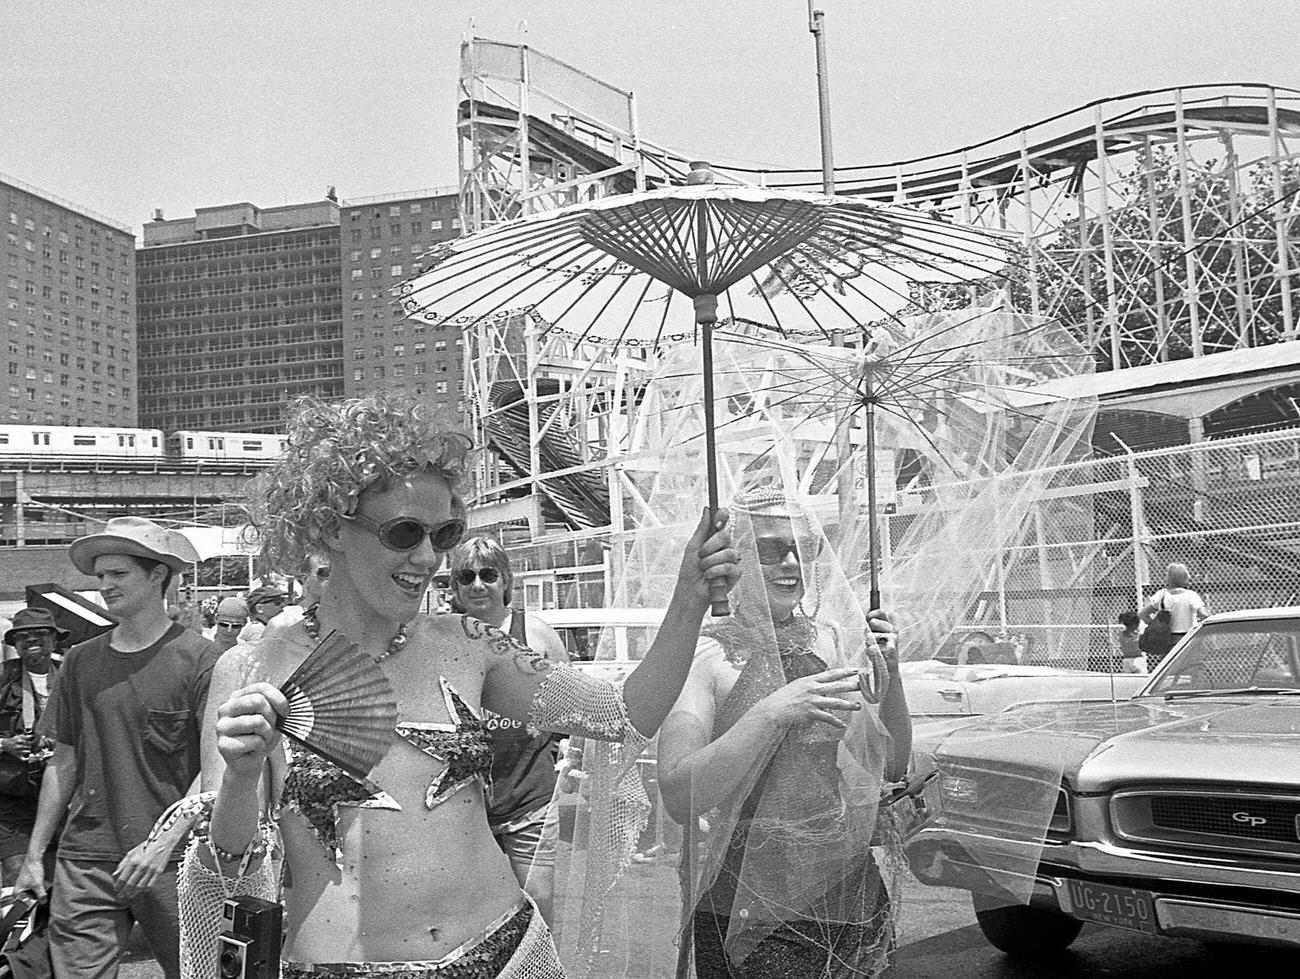 Women Carry Paper Parasols At Coney Island Mermaid Parade, Cyclone Roller Coaster Visible, 1997